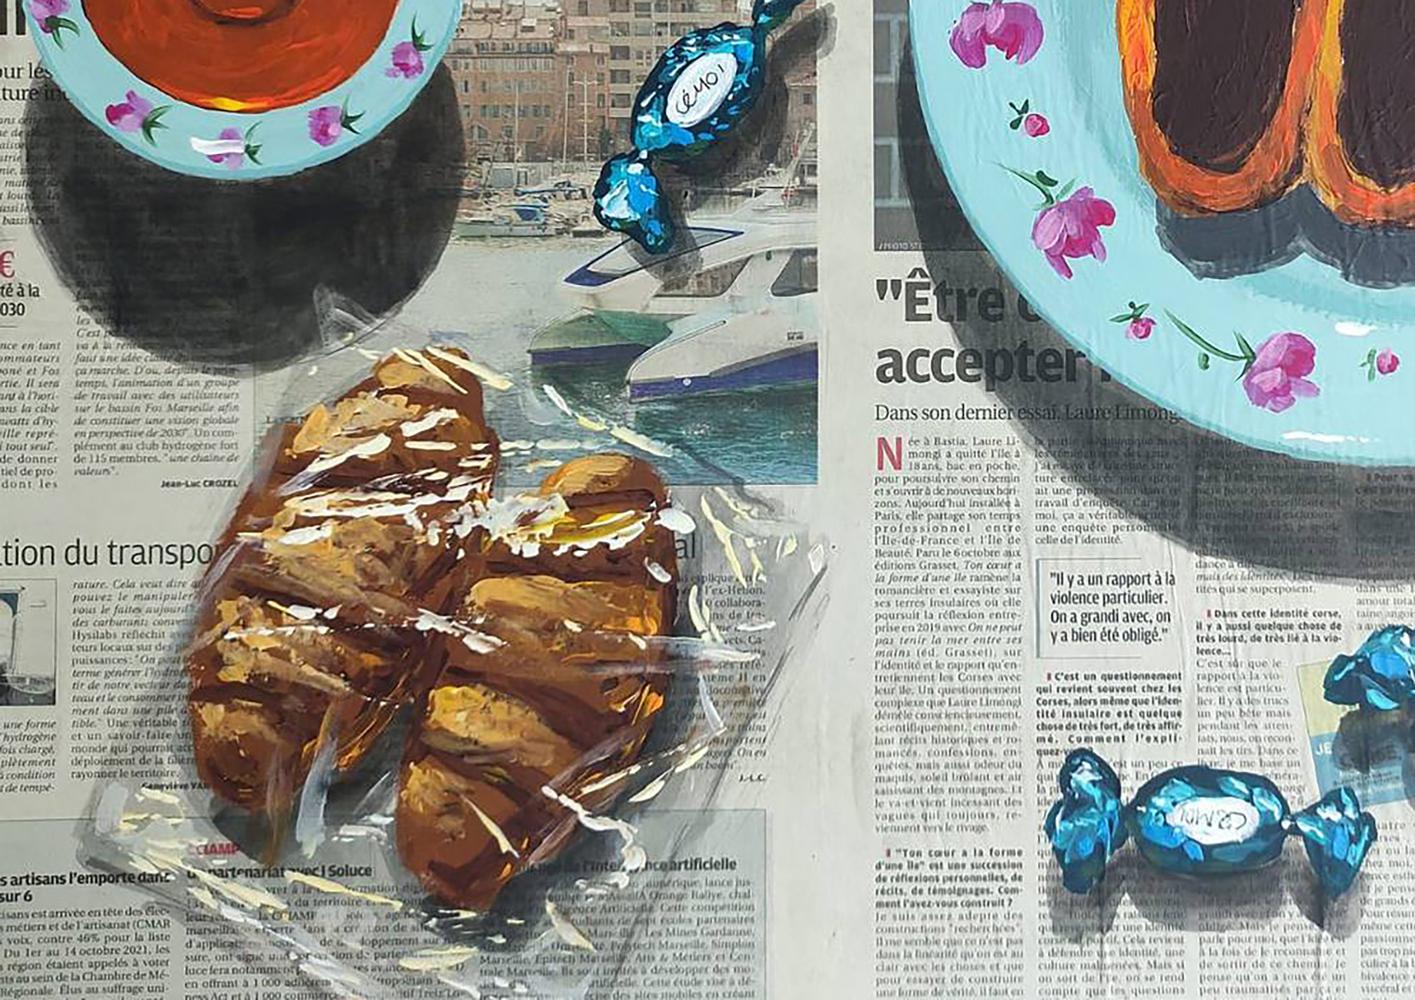 Acrylic painting Gourmet breakfast Elena Klimenko